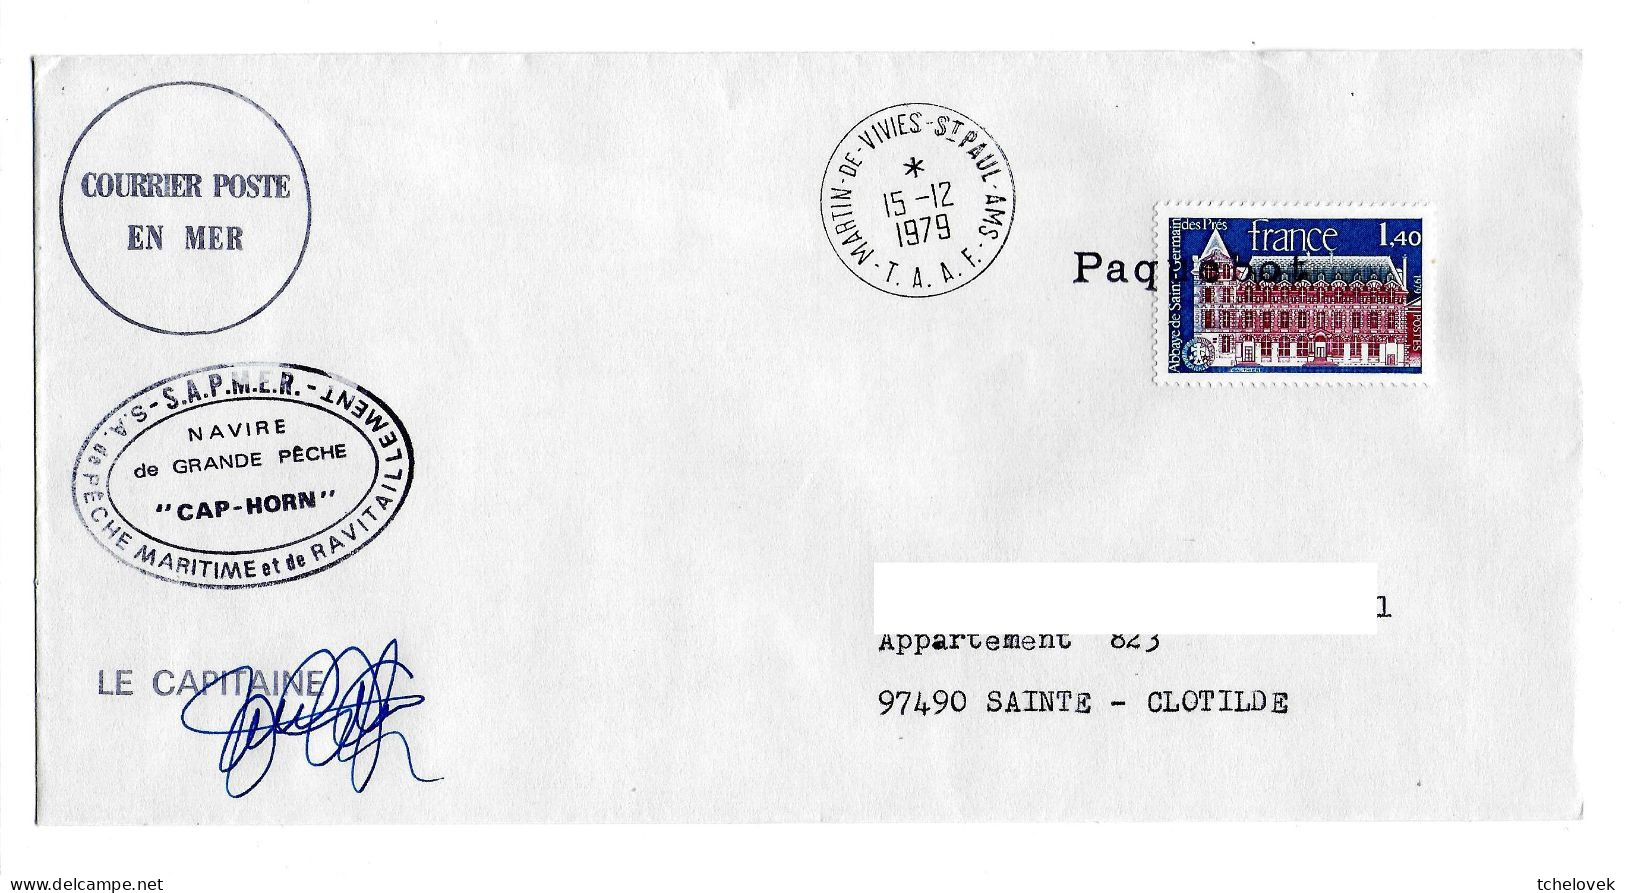 FSAT TAAF Cap Horn Sapmer 15.12.1979 SPA T. France 1.40 St Germain Des Pres (1) - Covers & Documents